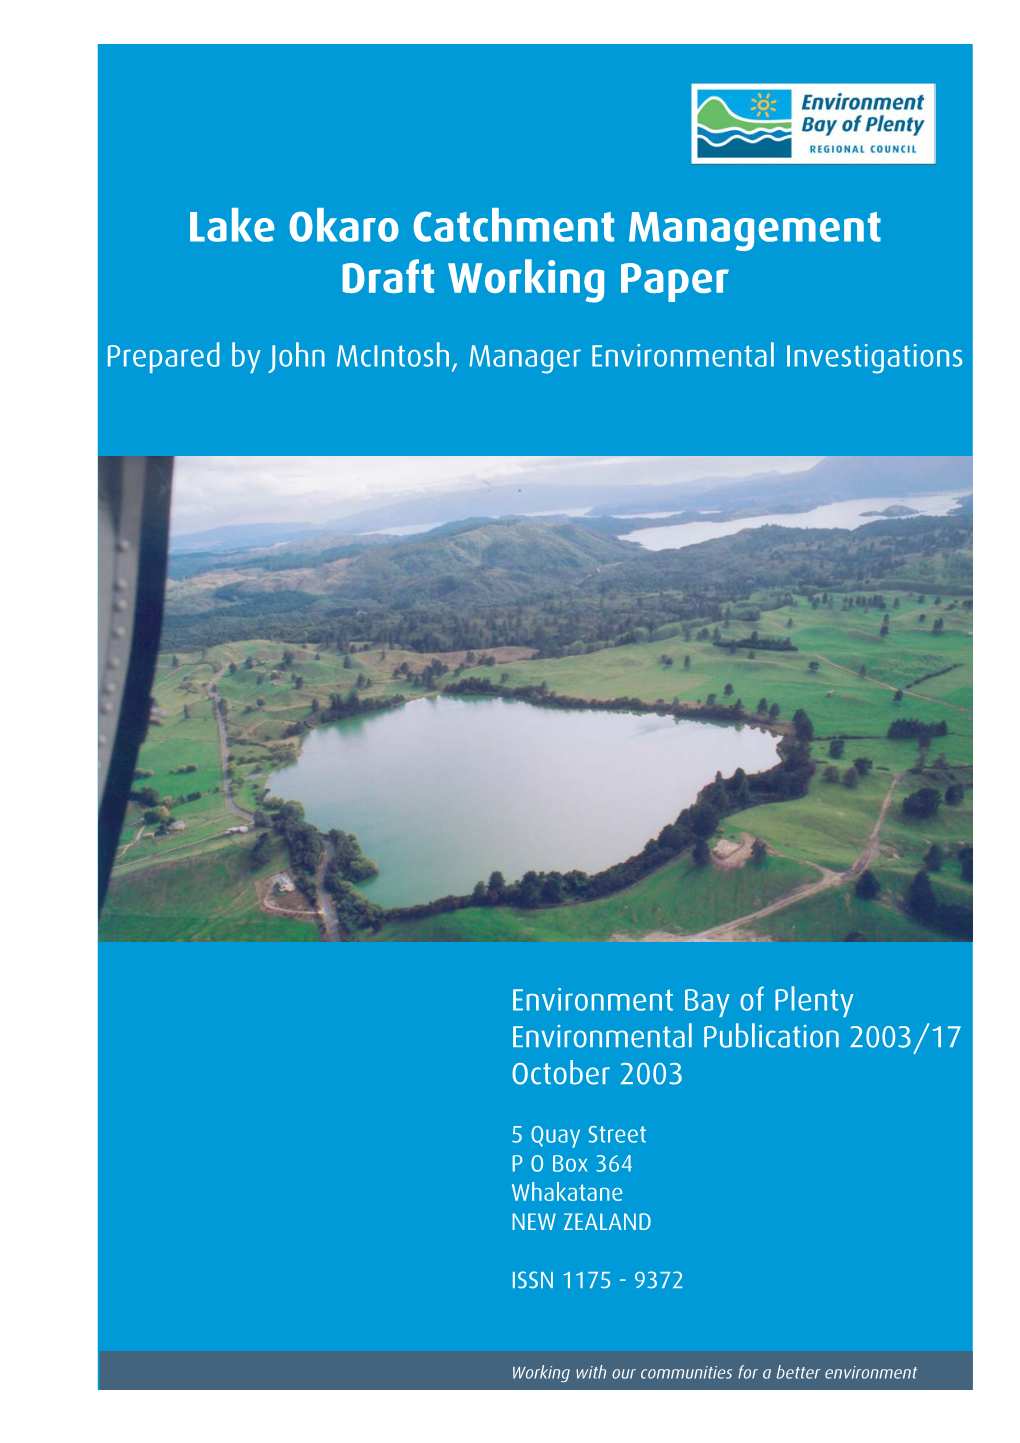 Lake Okaro Catchment Management Draft Working Paper